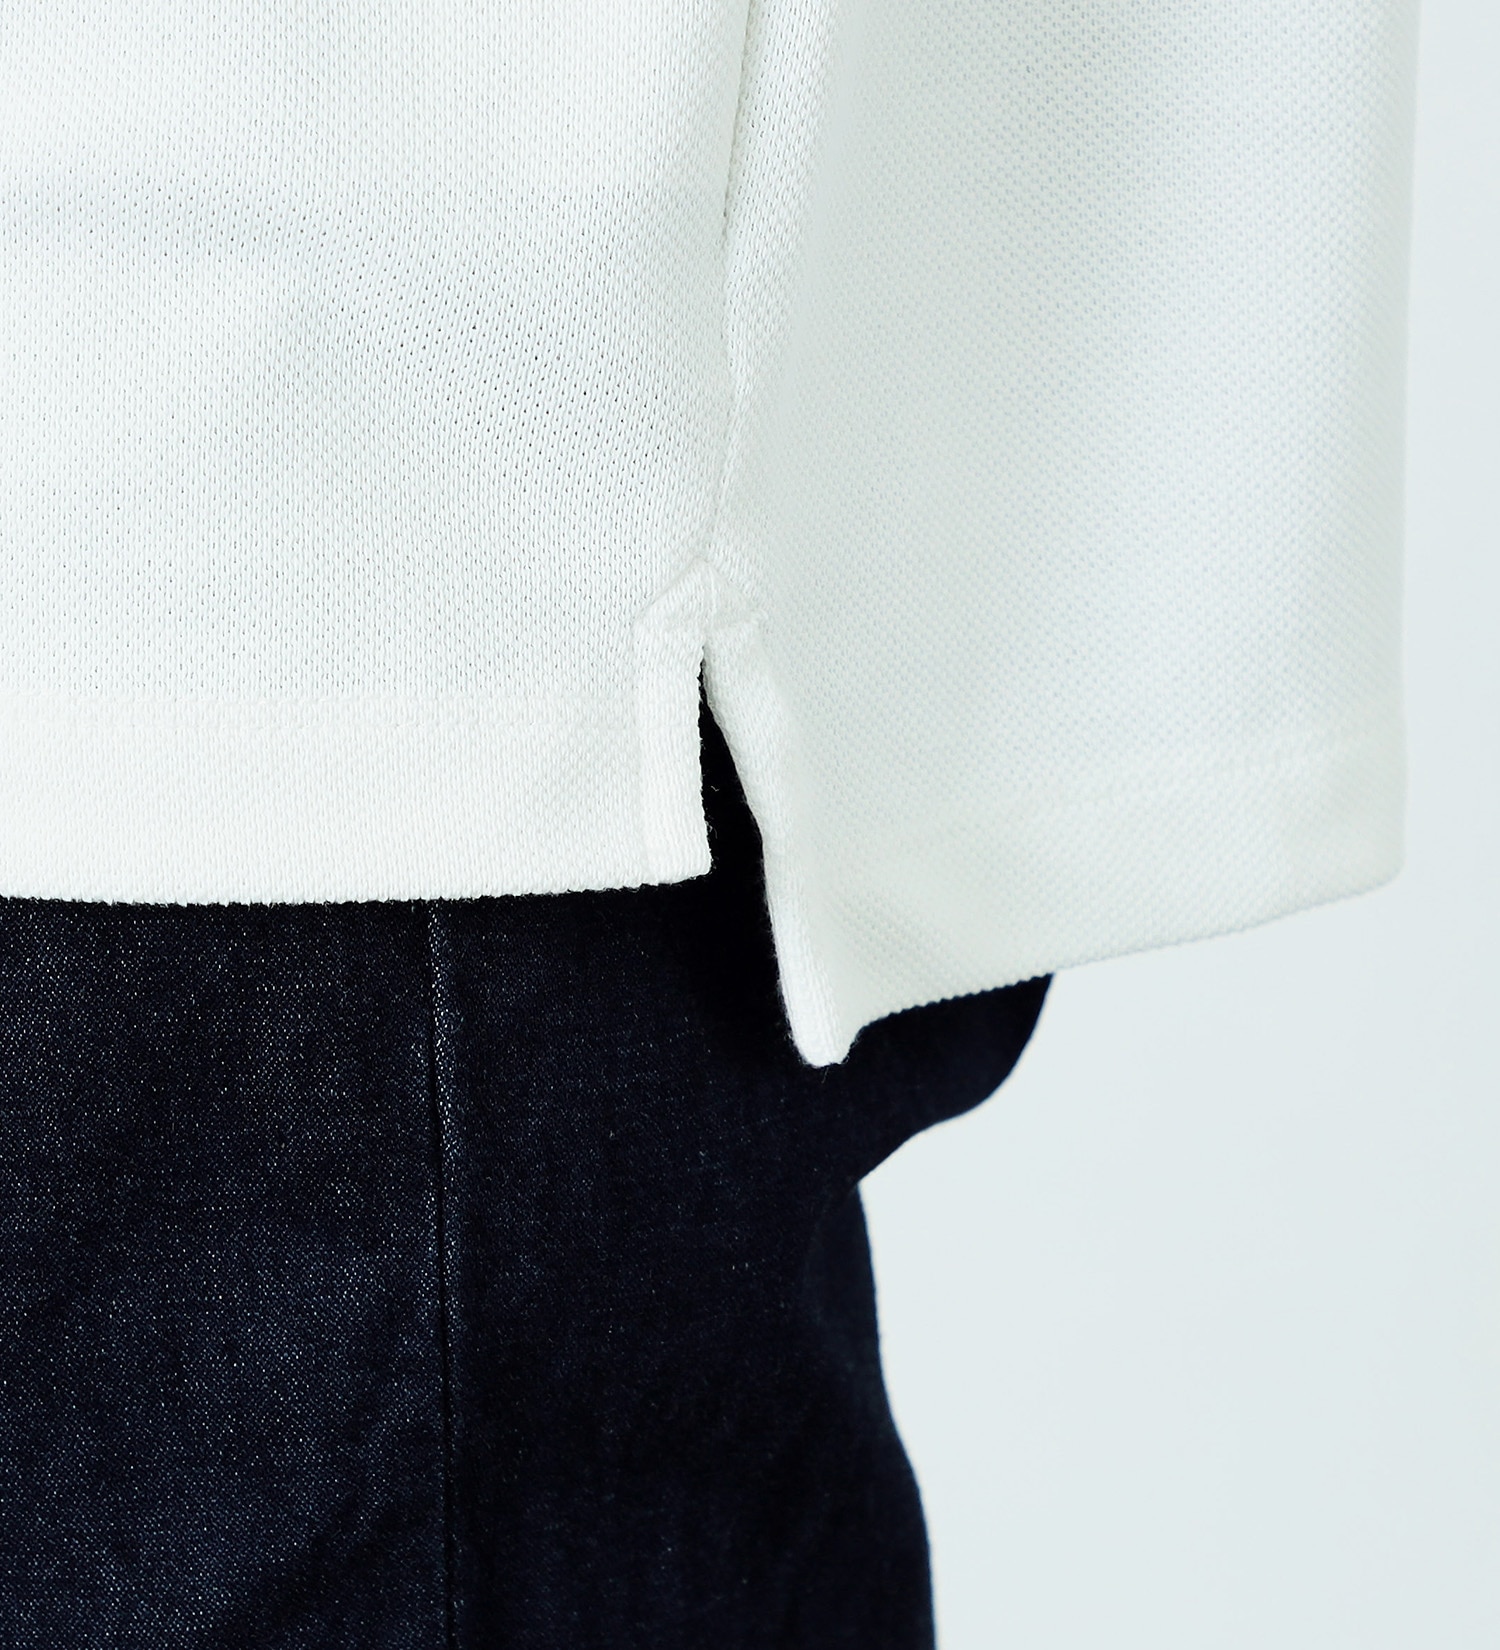 EDWIN(エドウイン)の【サマーセール】COOL FLEX ポロシャツ（半袖）|トップス/ポロシャツ/メンズ|ホワイト